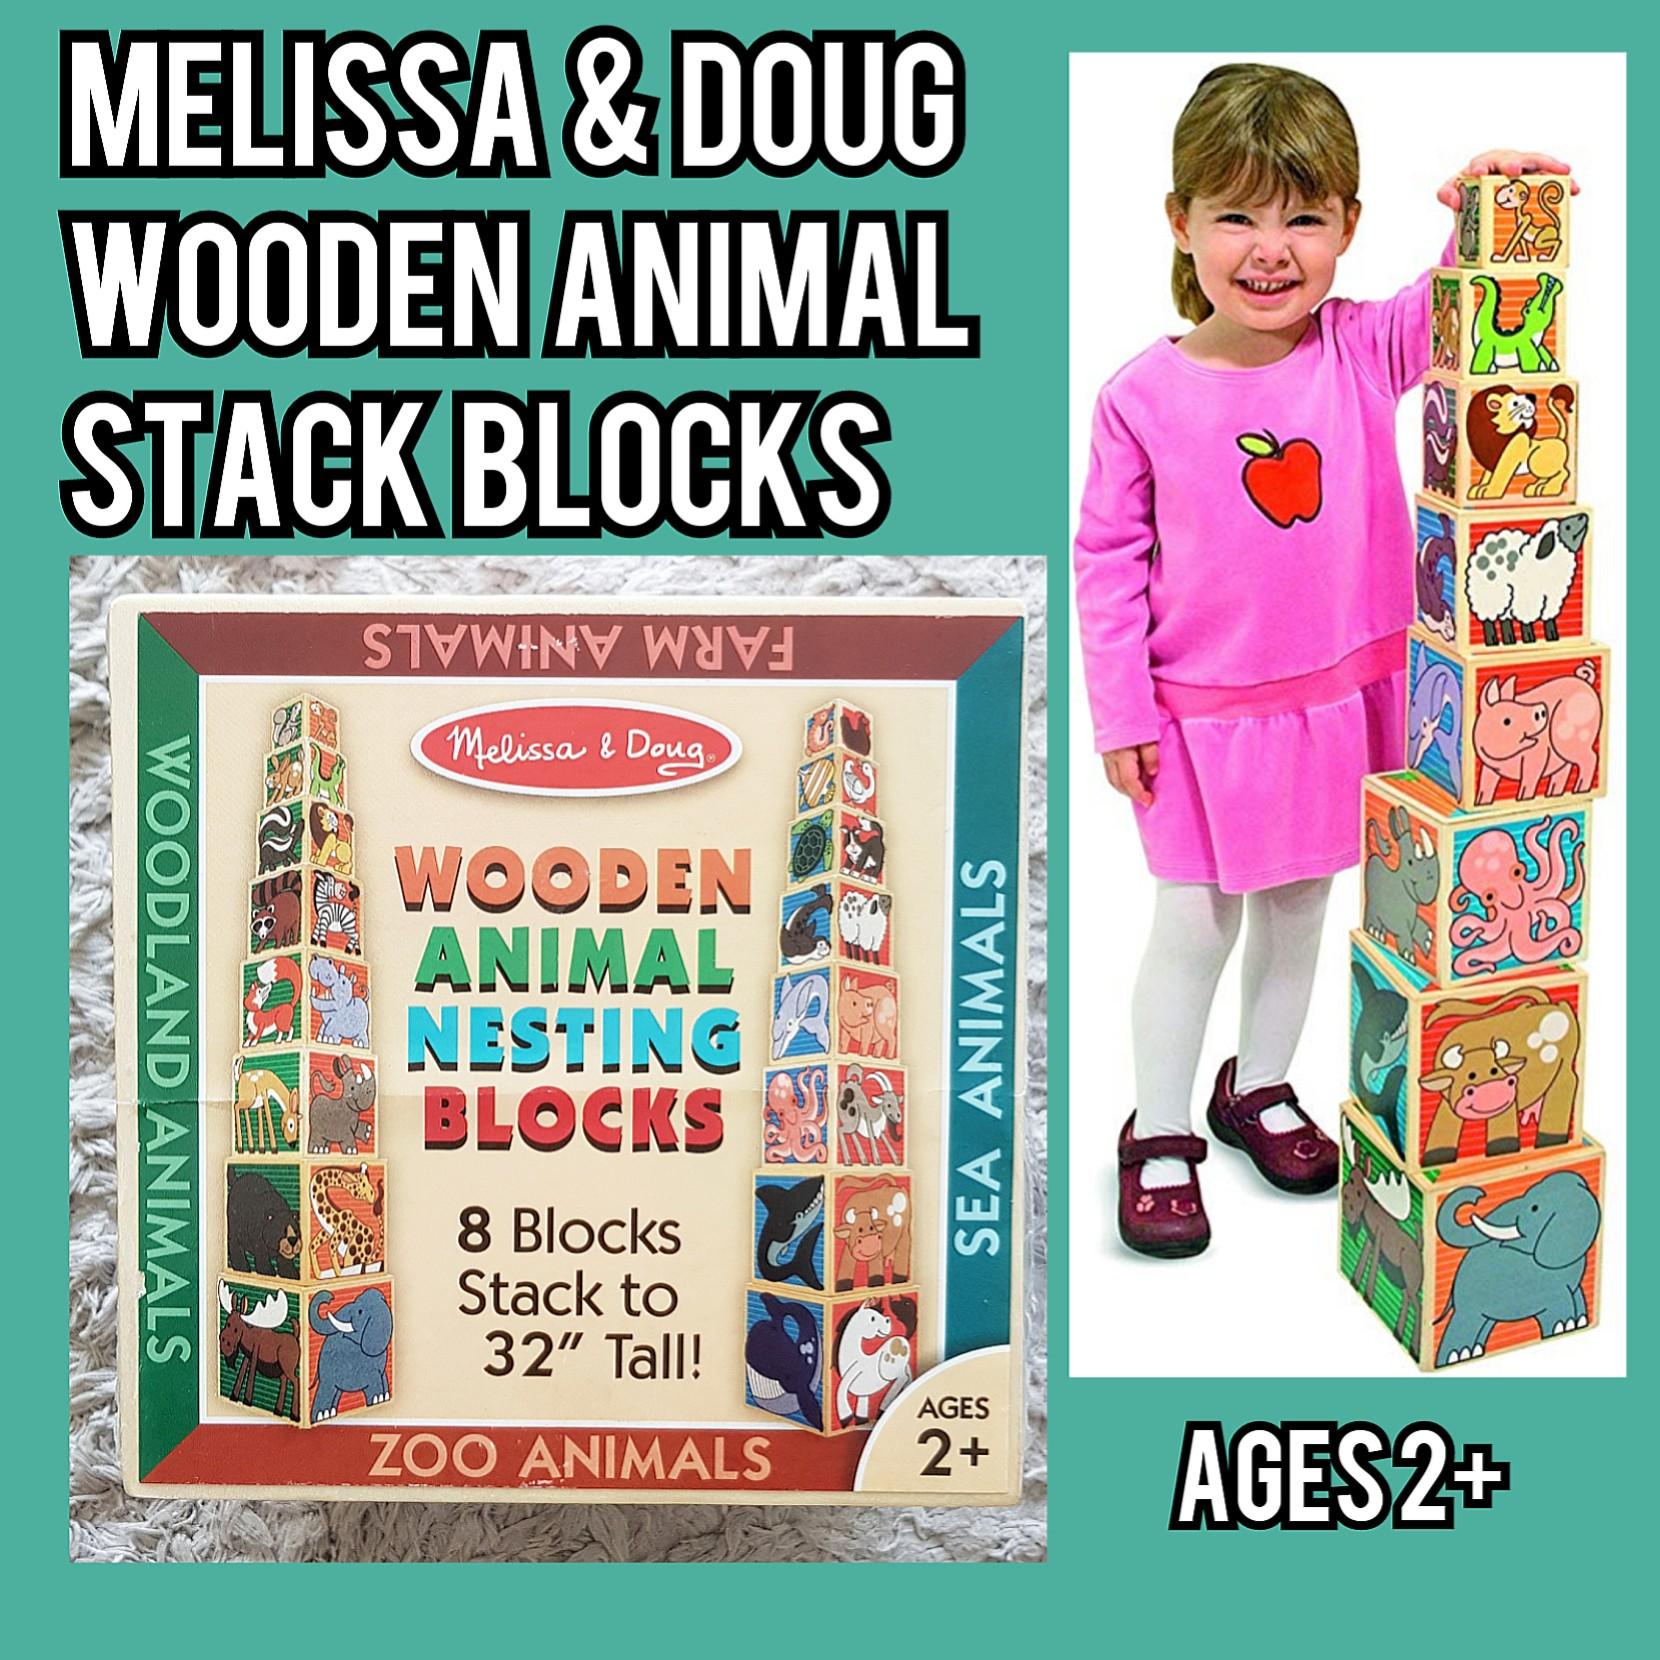 melissa & doug wooden animal nesting blocks